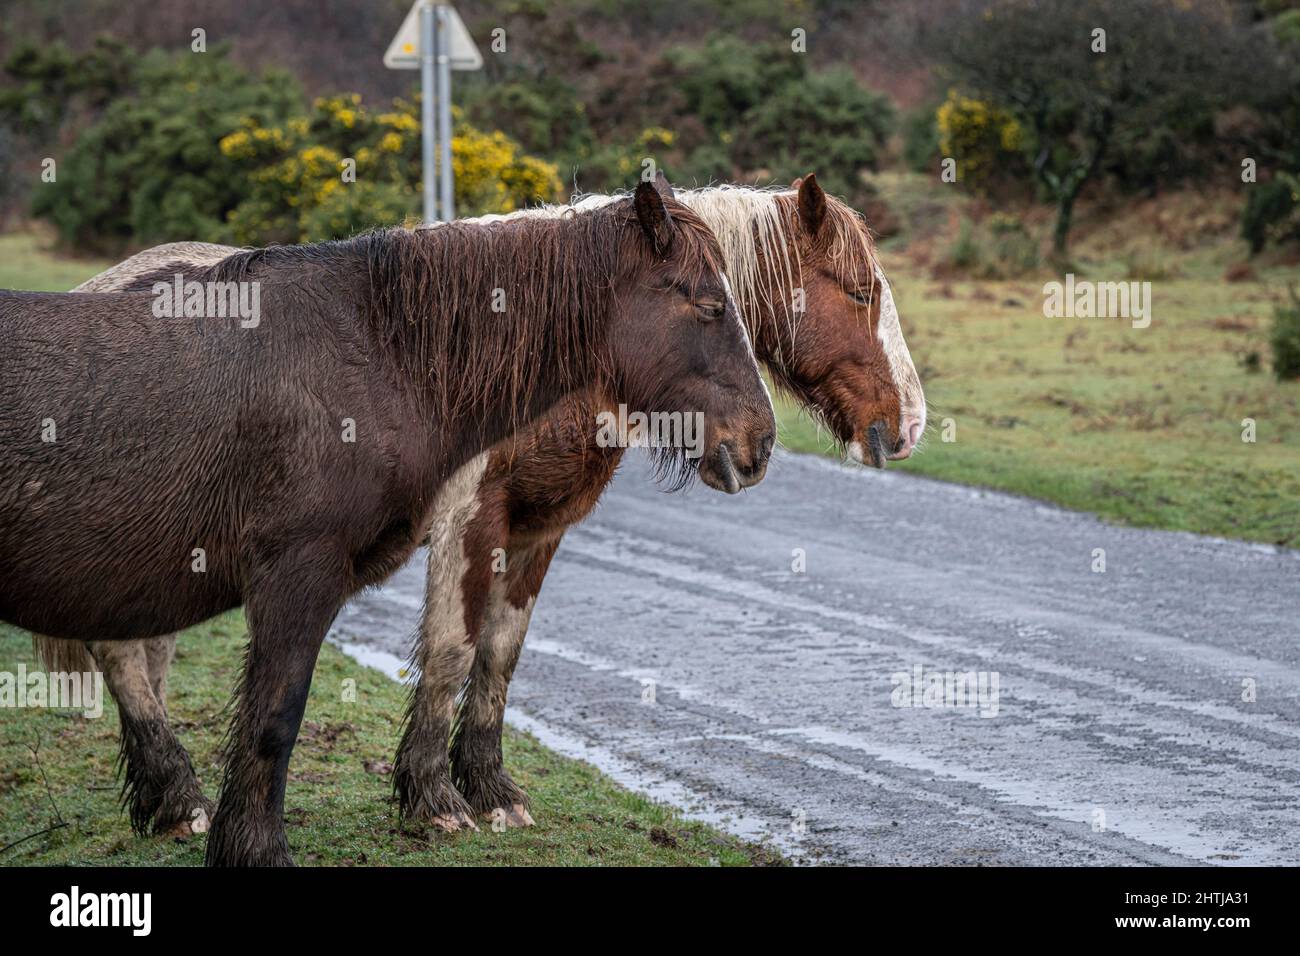 Bodmin Ponies grasen bei miserablen, nebligen Wetterbedingungen auf den wilden Goonzion Downs am Bodmin Moor in Cornwall. Stockfoto